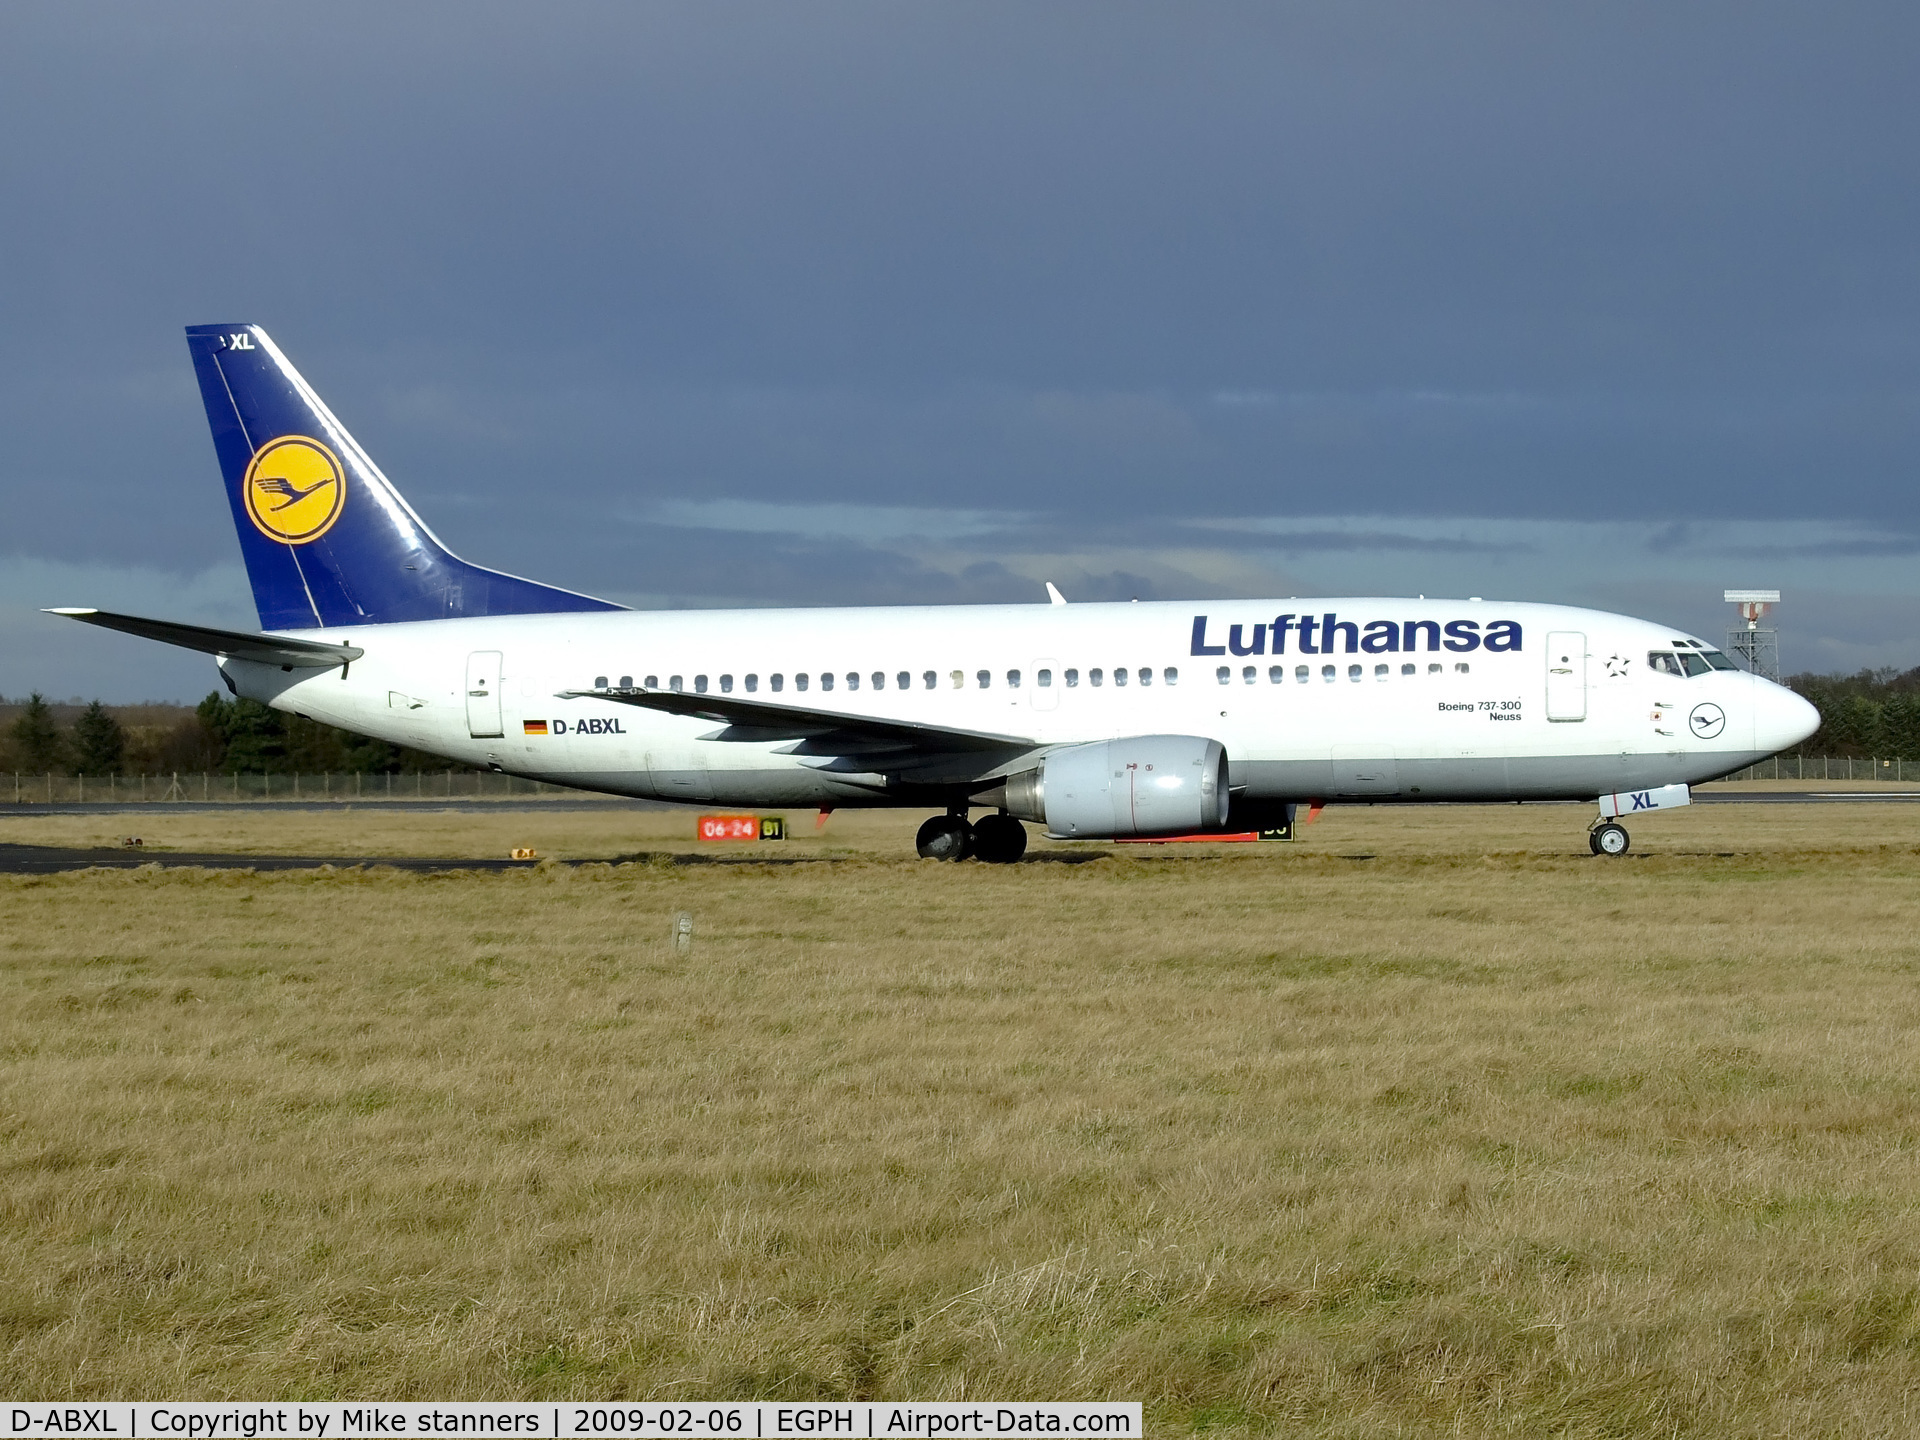 D-ABXL, 1986 Boeing 737-330 C/N 23531, Lufthansa flight arriving at EDI from Frankfurt